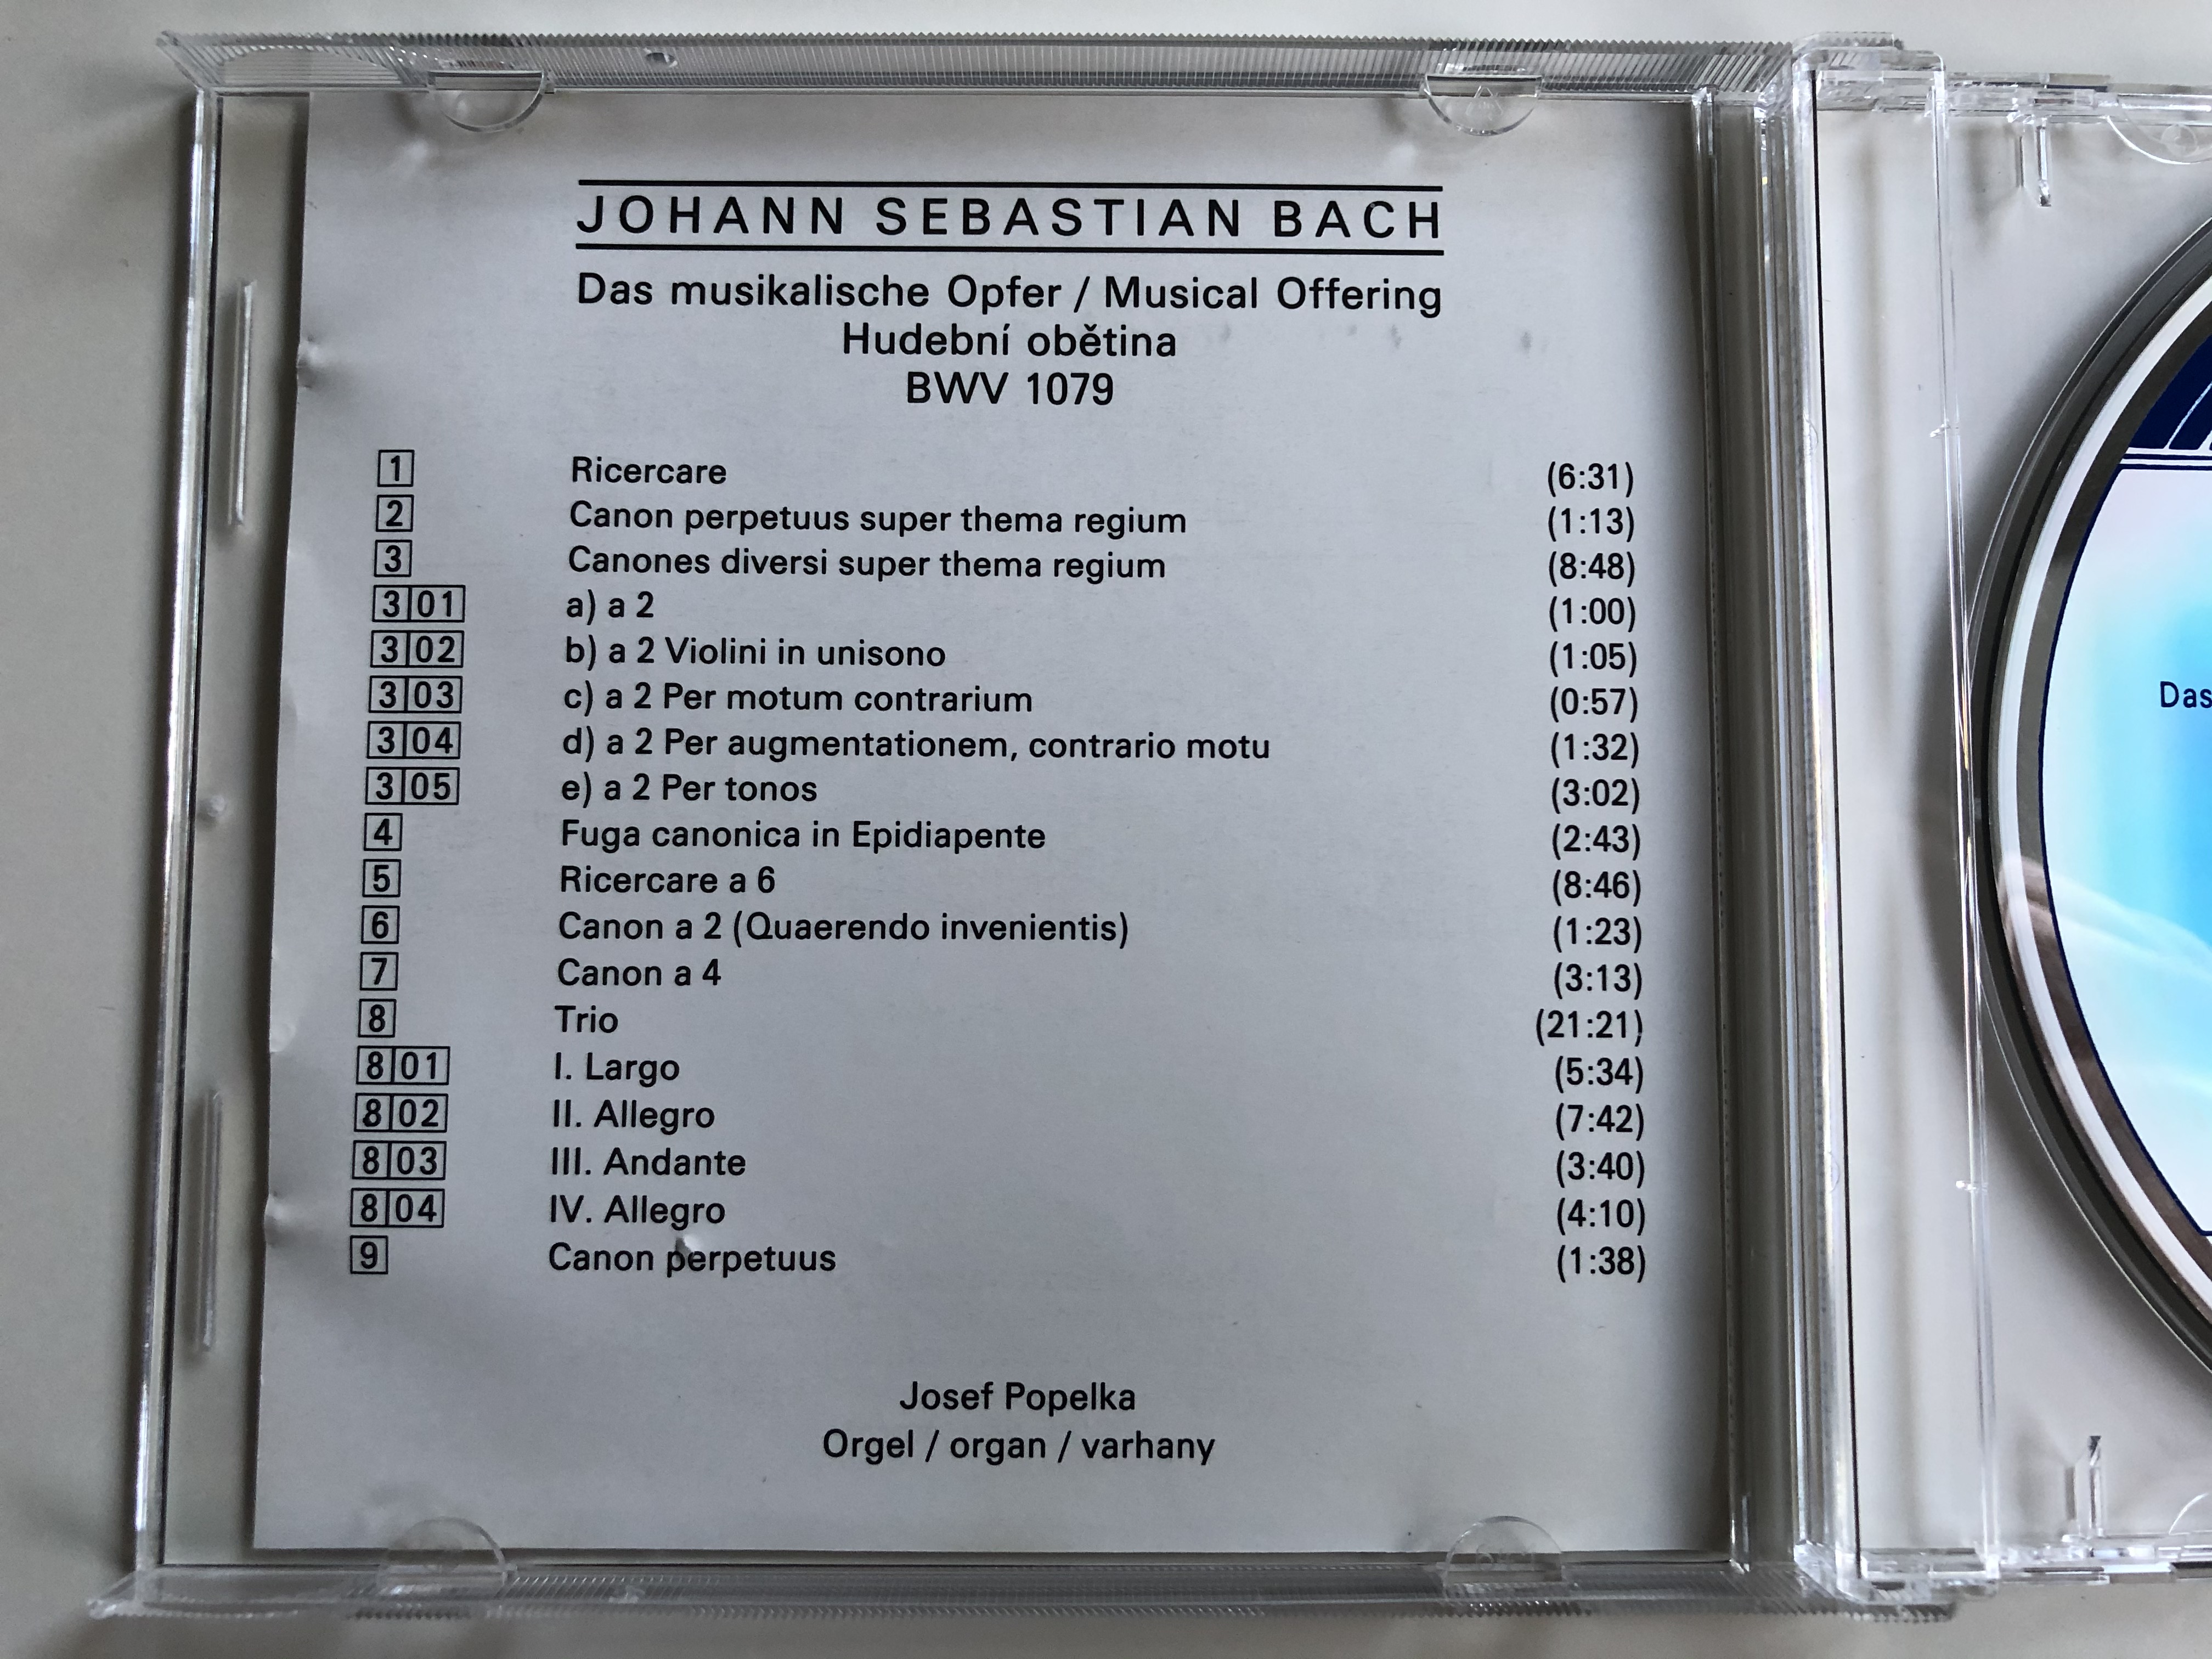 johann-sebastian-bach-josef-popelka-orgel-das-musikalische-opfer-bwv-1079-panton-audio-cd-1988-stereo-81-0750-2131-2-.jpg